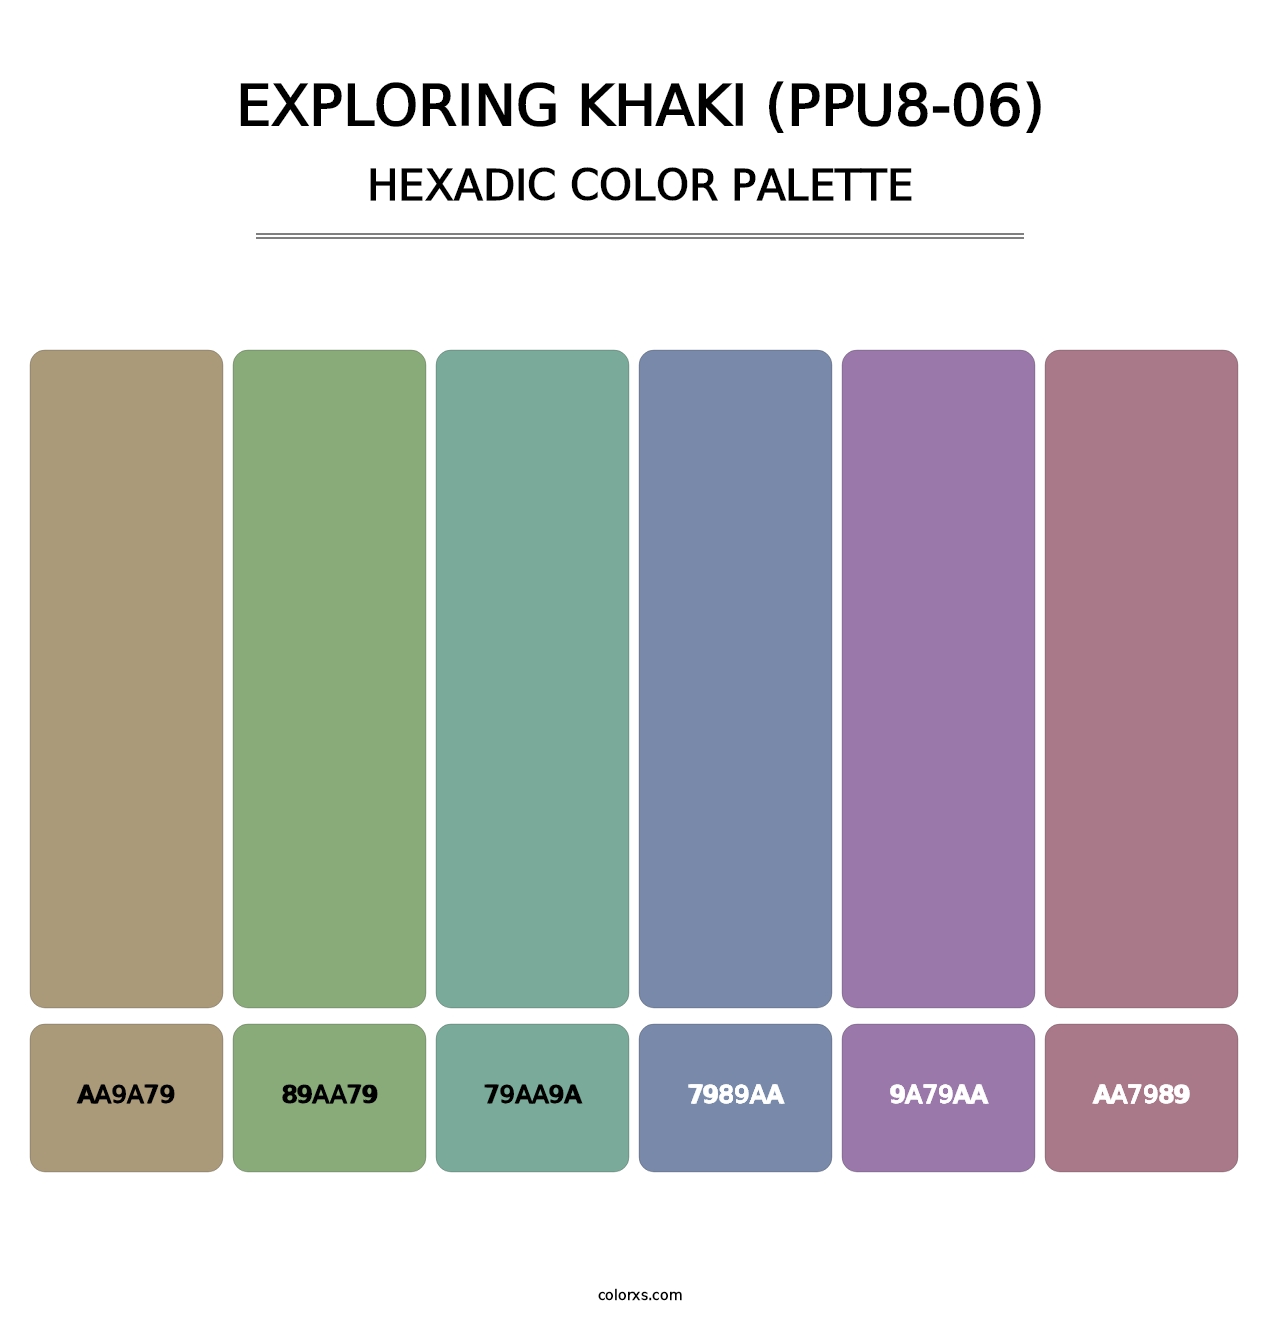 Exploring Khaki (PPU8-06) - Hexadic Color Palette